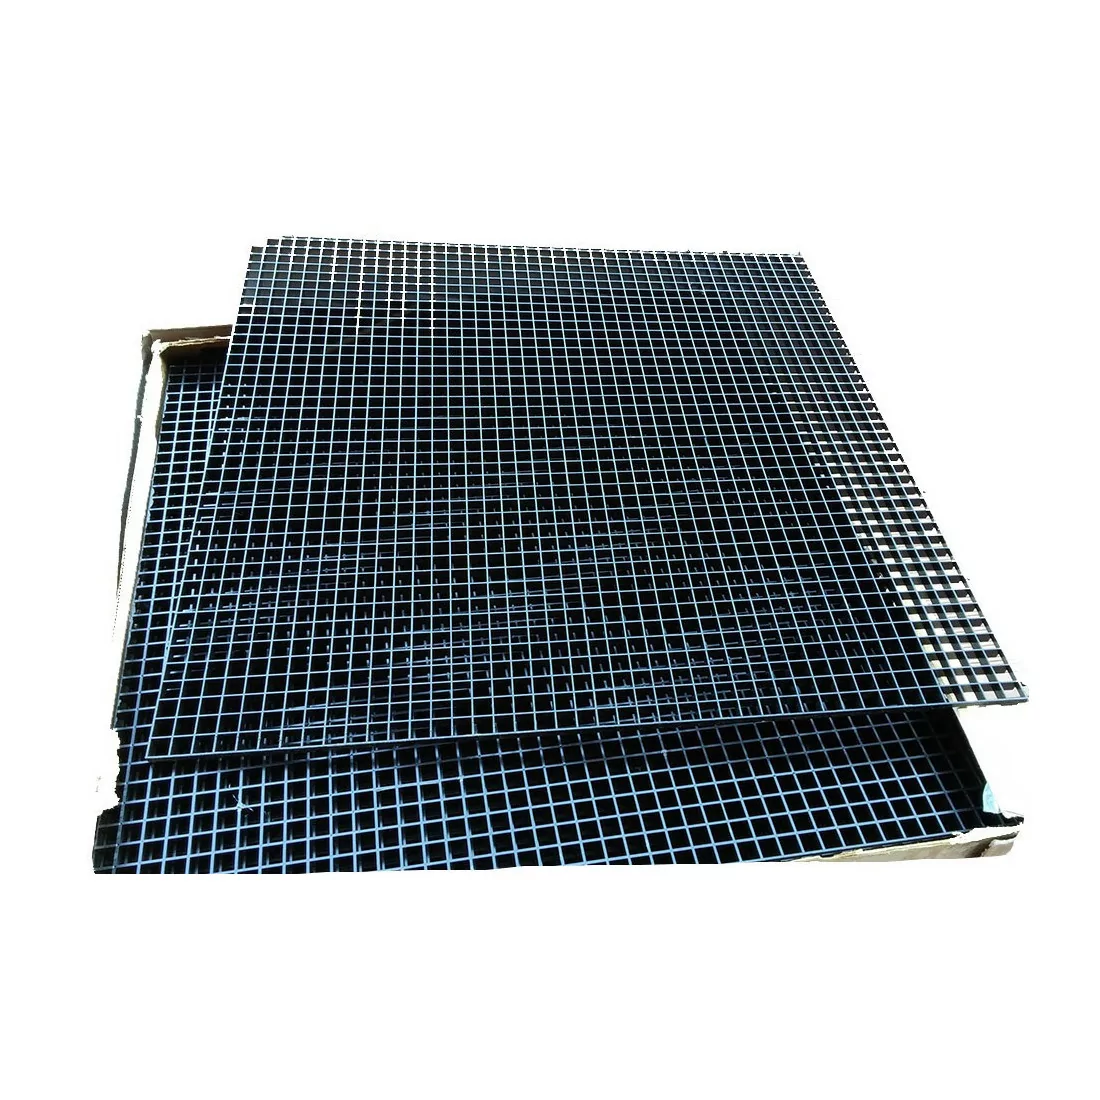 Optical grid 60x60cm